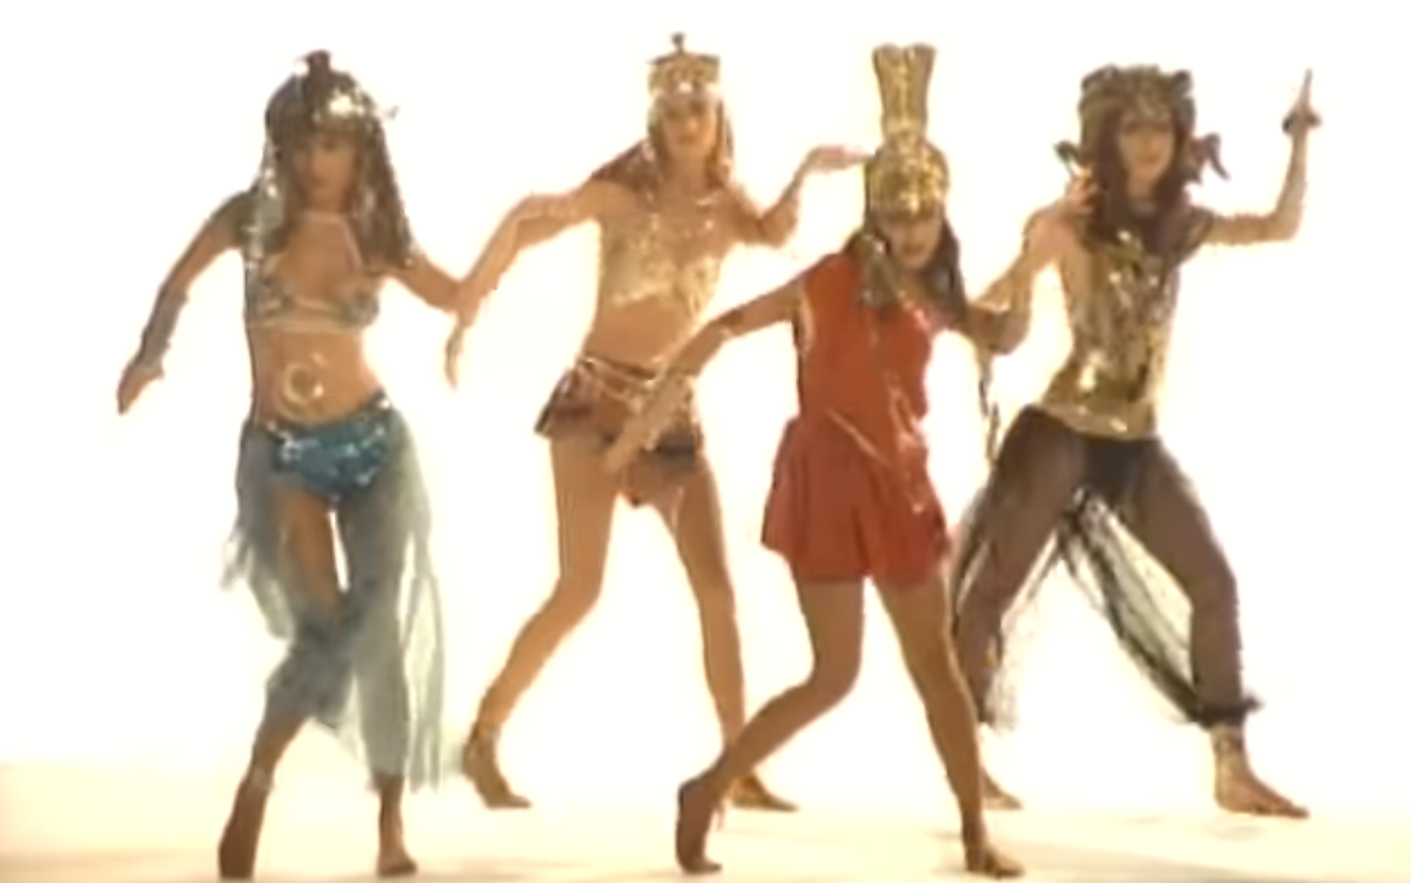 Bangles walk like. Walk like Egyptian группа. The Bangles walk like an Egyptian. The Bangles - walk like an Egyptian (1986). Поза бегущего египтянина.